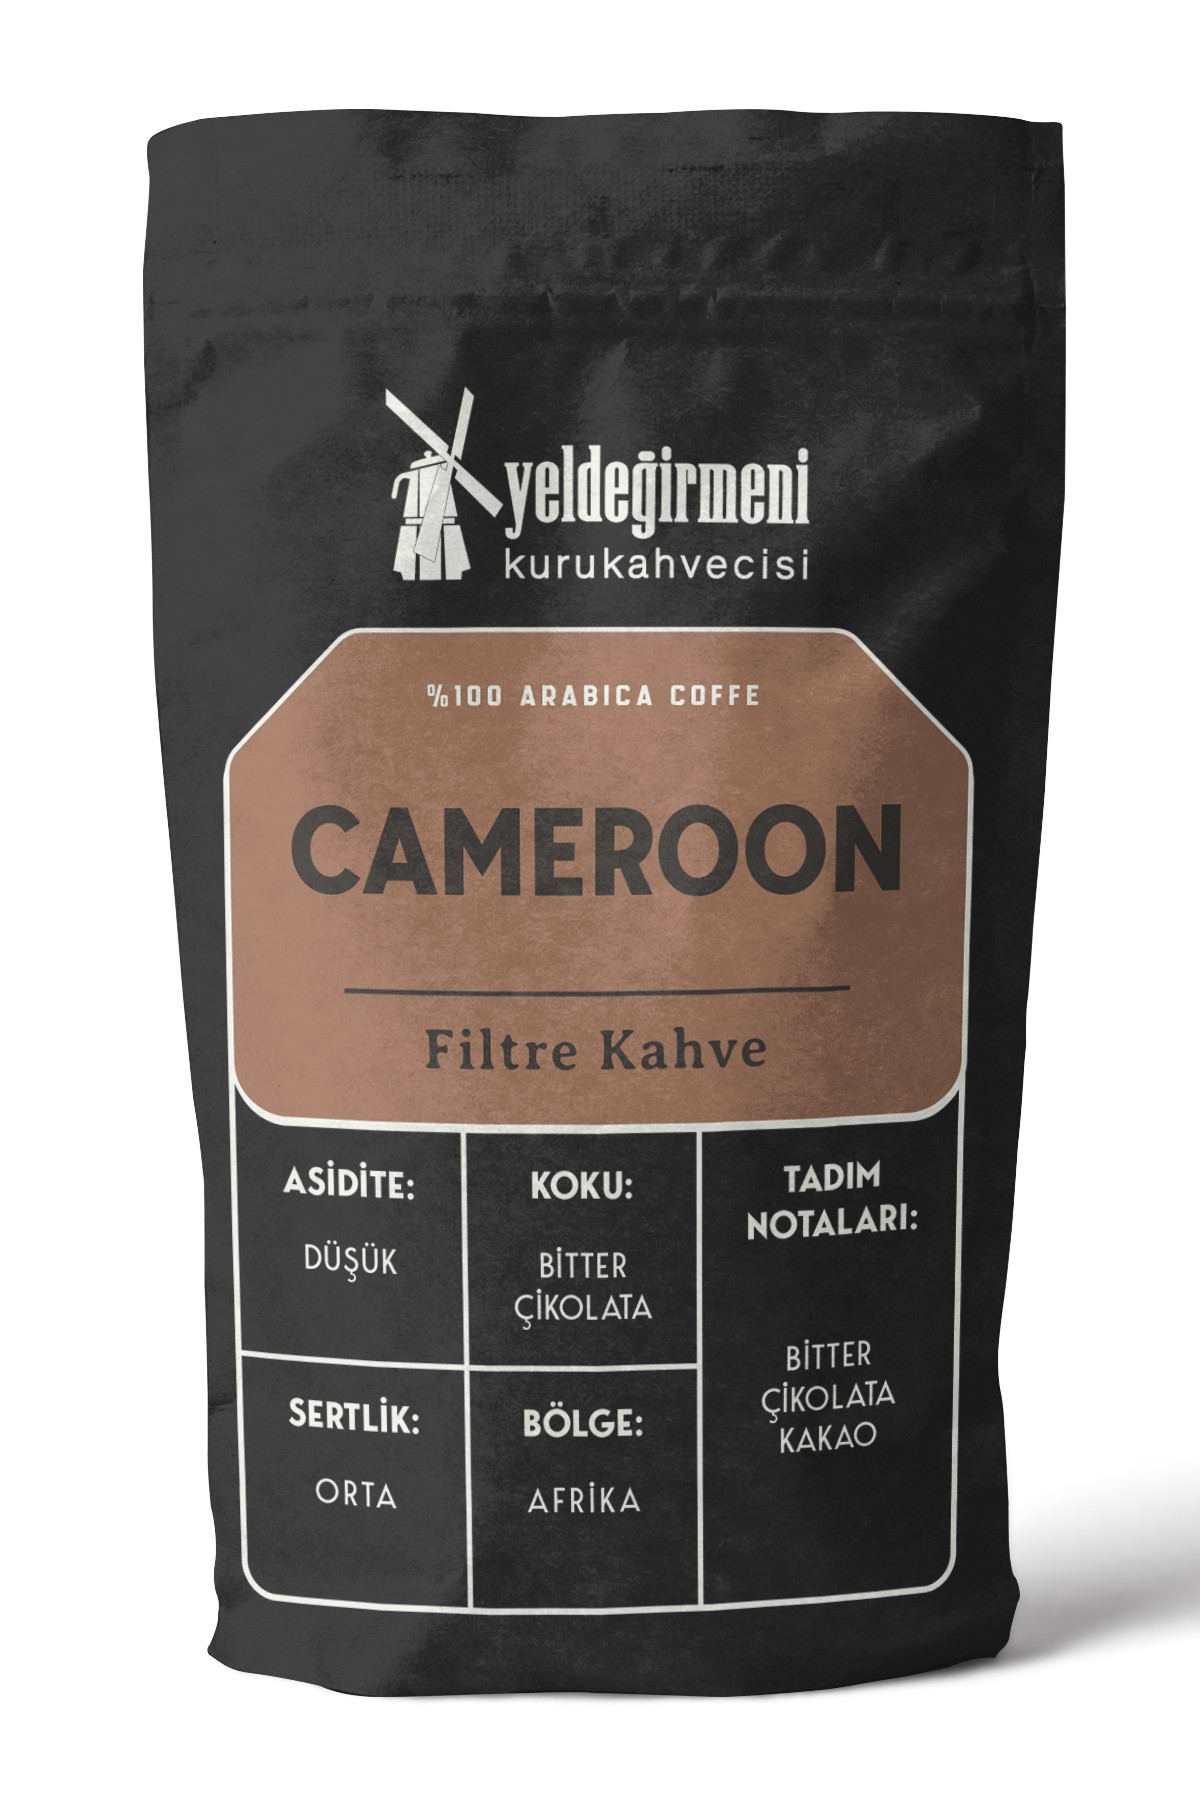 Cameroon Filtre Kahve